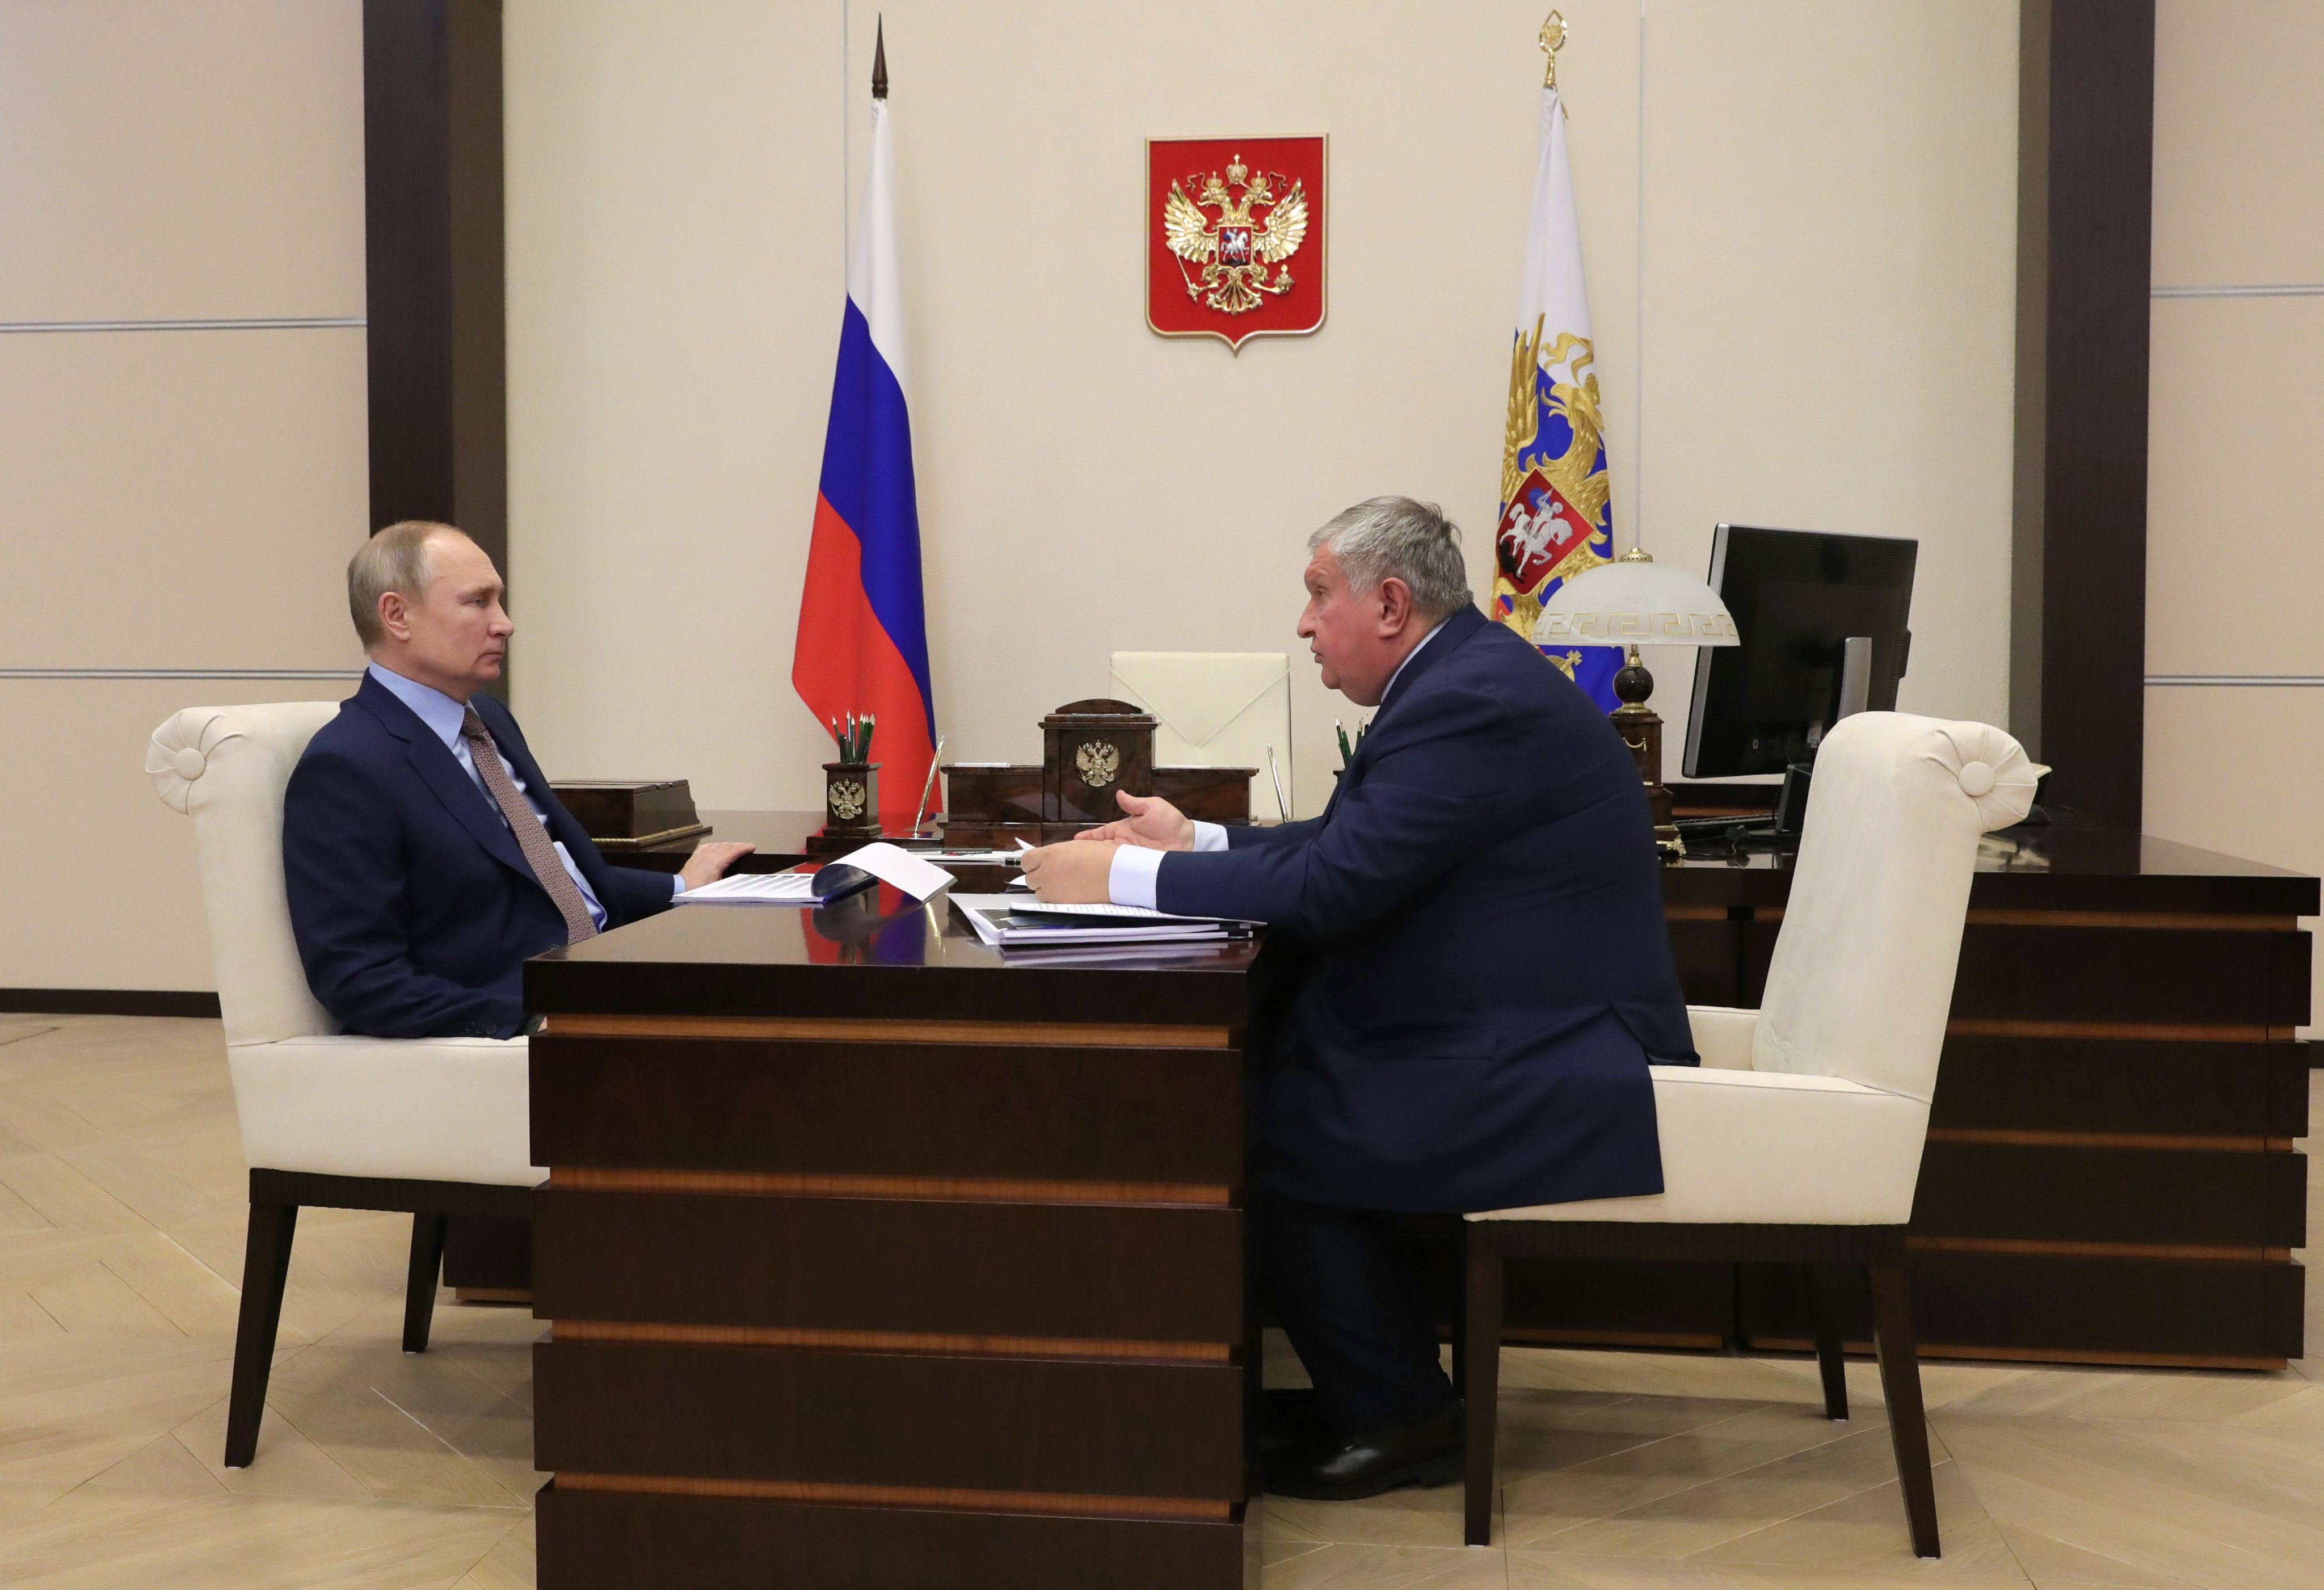 Russia&#039;s President Putin and Rosneft CEO Sechin meet in Novo-Ogaryovo